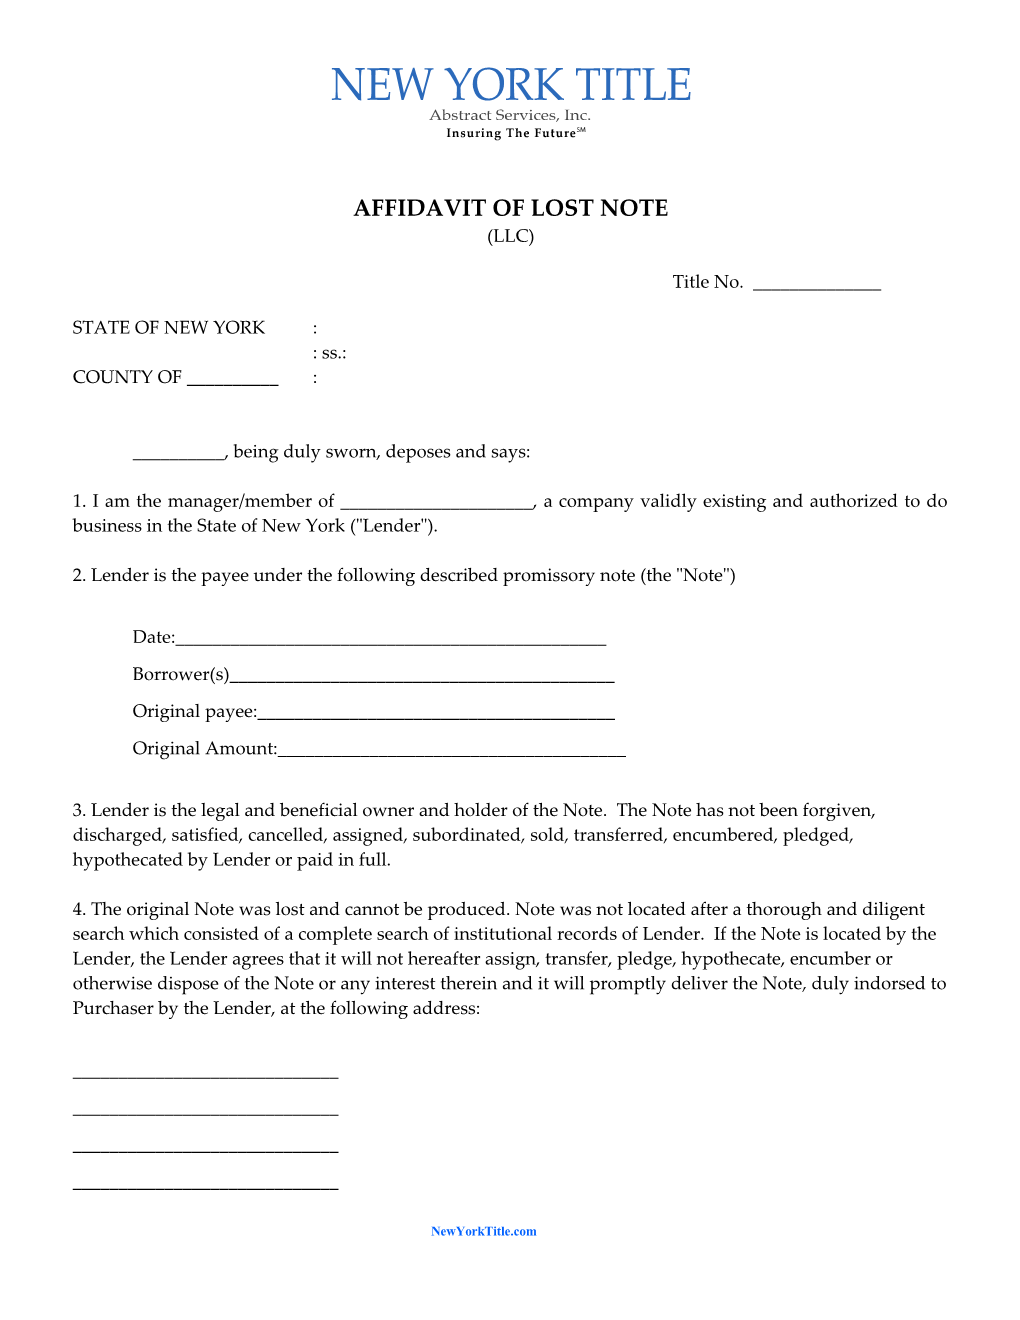 Affidavit of Lost Note